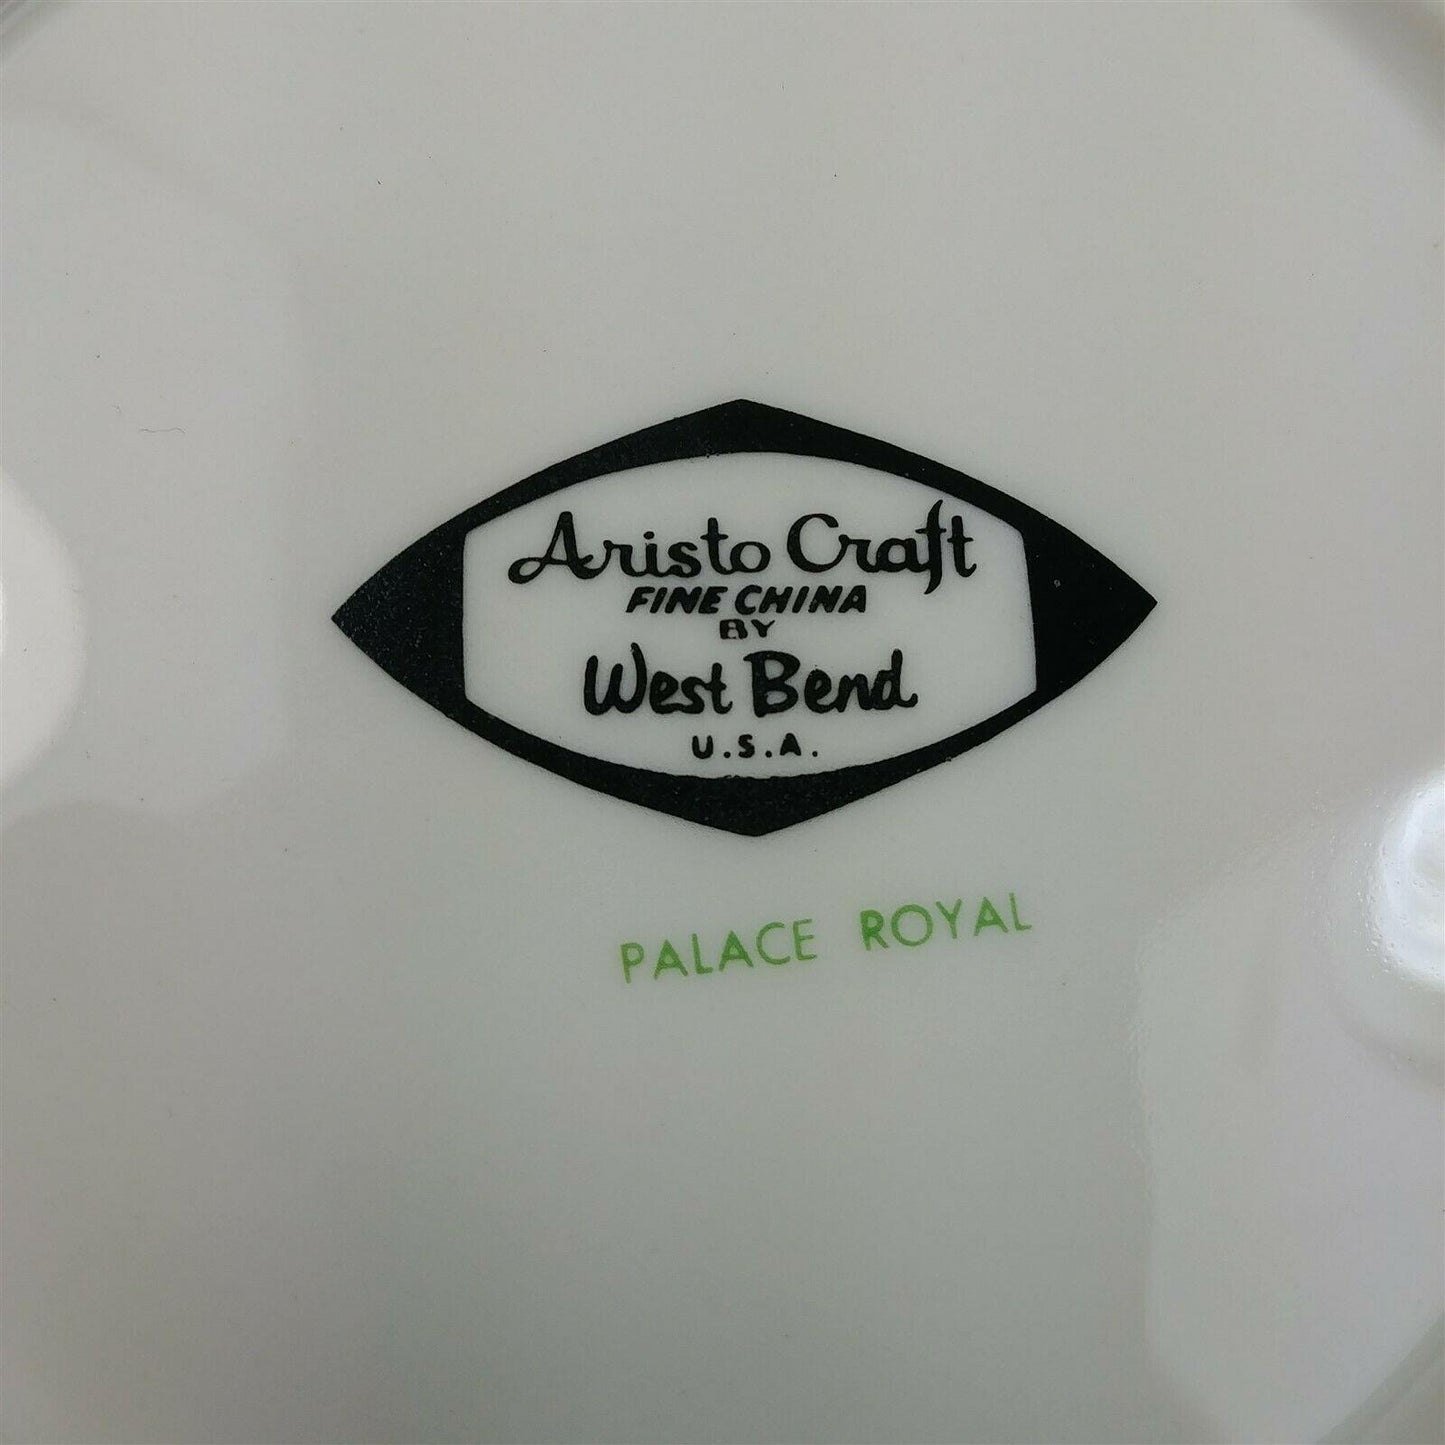 6 Aristo Craft West Bend Palace Royal Platinum Trim Coupe Dessert Plates 6 3/8"